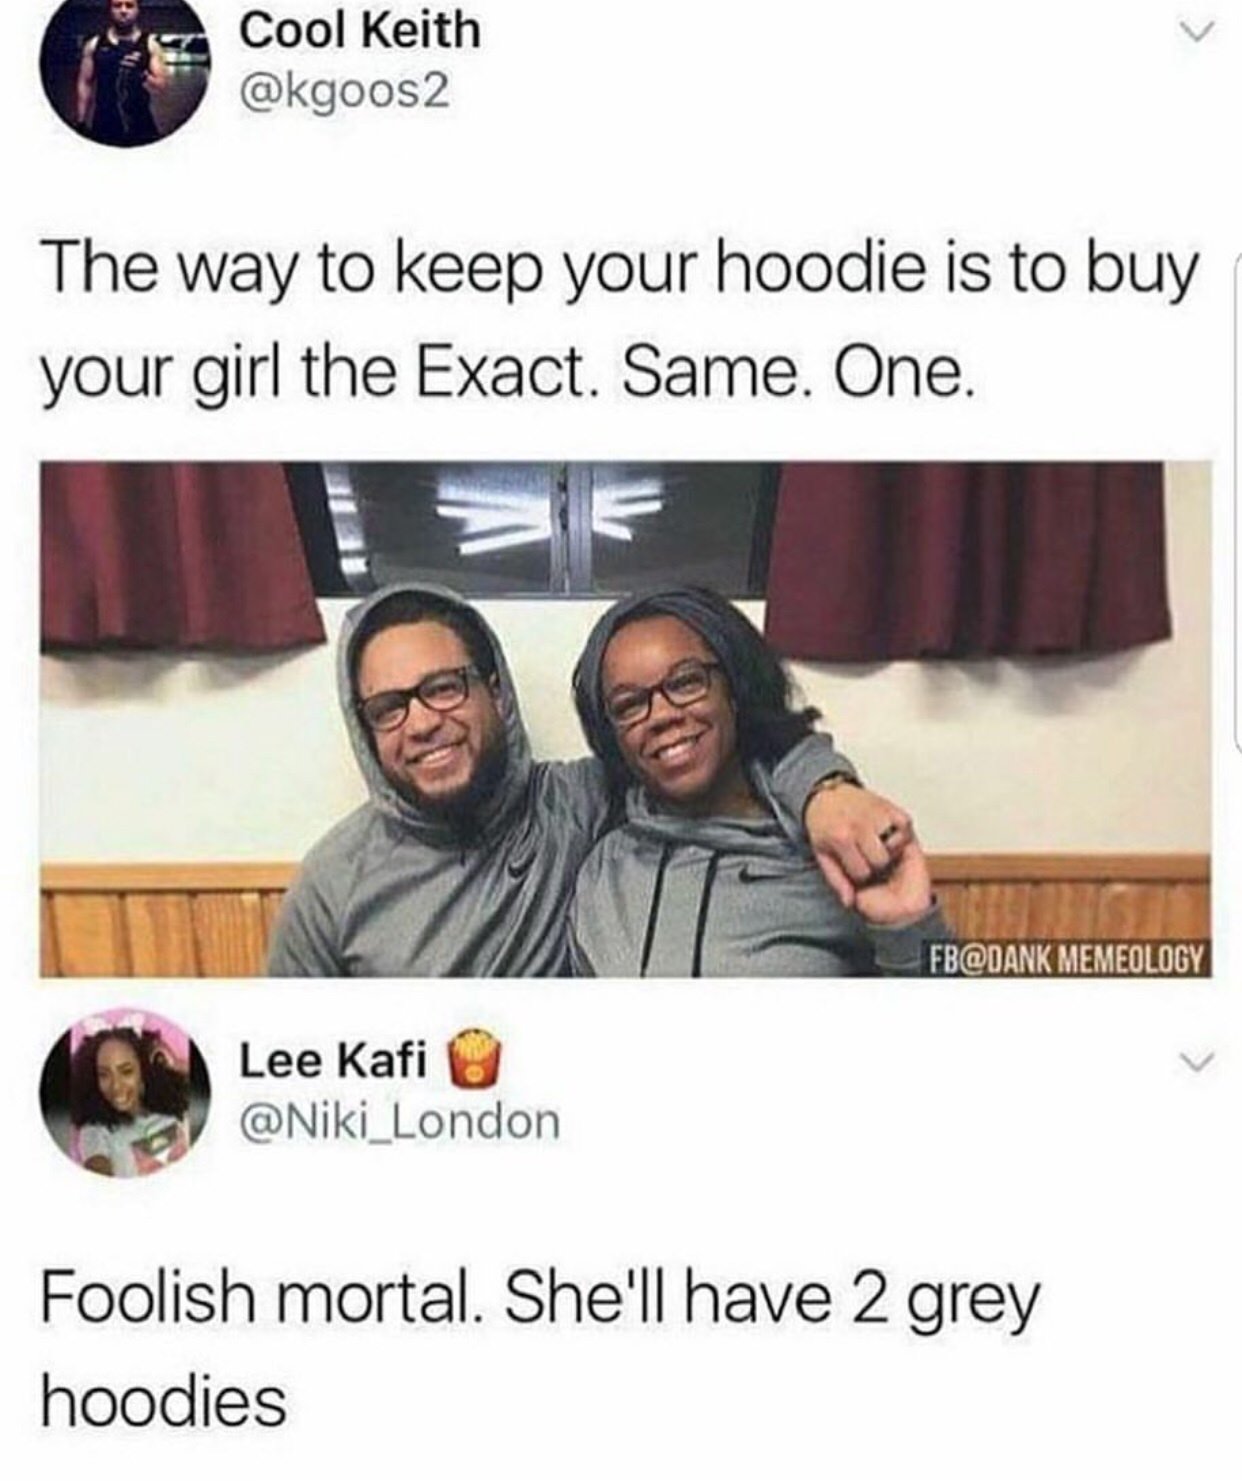 memes - girlfriend hoodie meme - Cool Keith The way to keep your hoodie is to buy your girl the Exact. Same. One. Fb Memeology Lee Kafi Foolish mortal. She'll have 2 grey hoodies